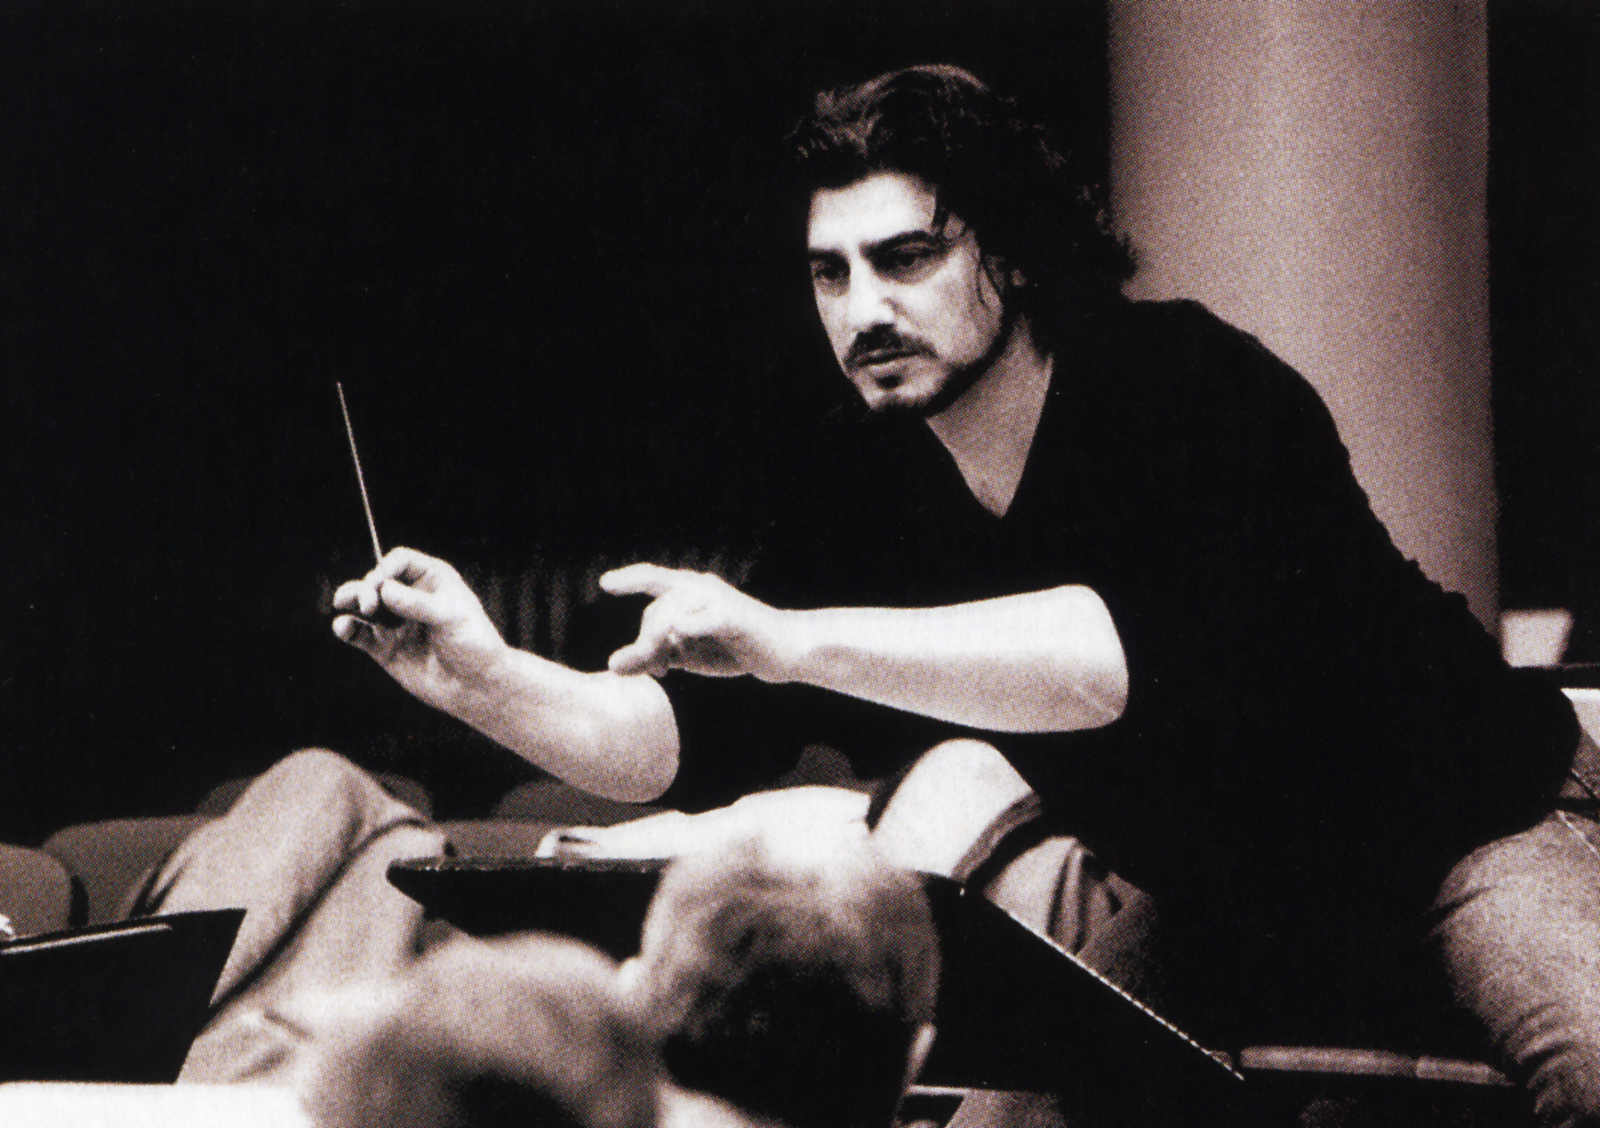 Jos Cura, Conductor, Sinfornia Varsovia, Warsaw, 2001 Inagural Concert.